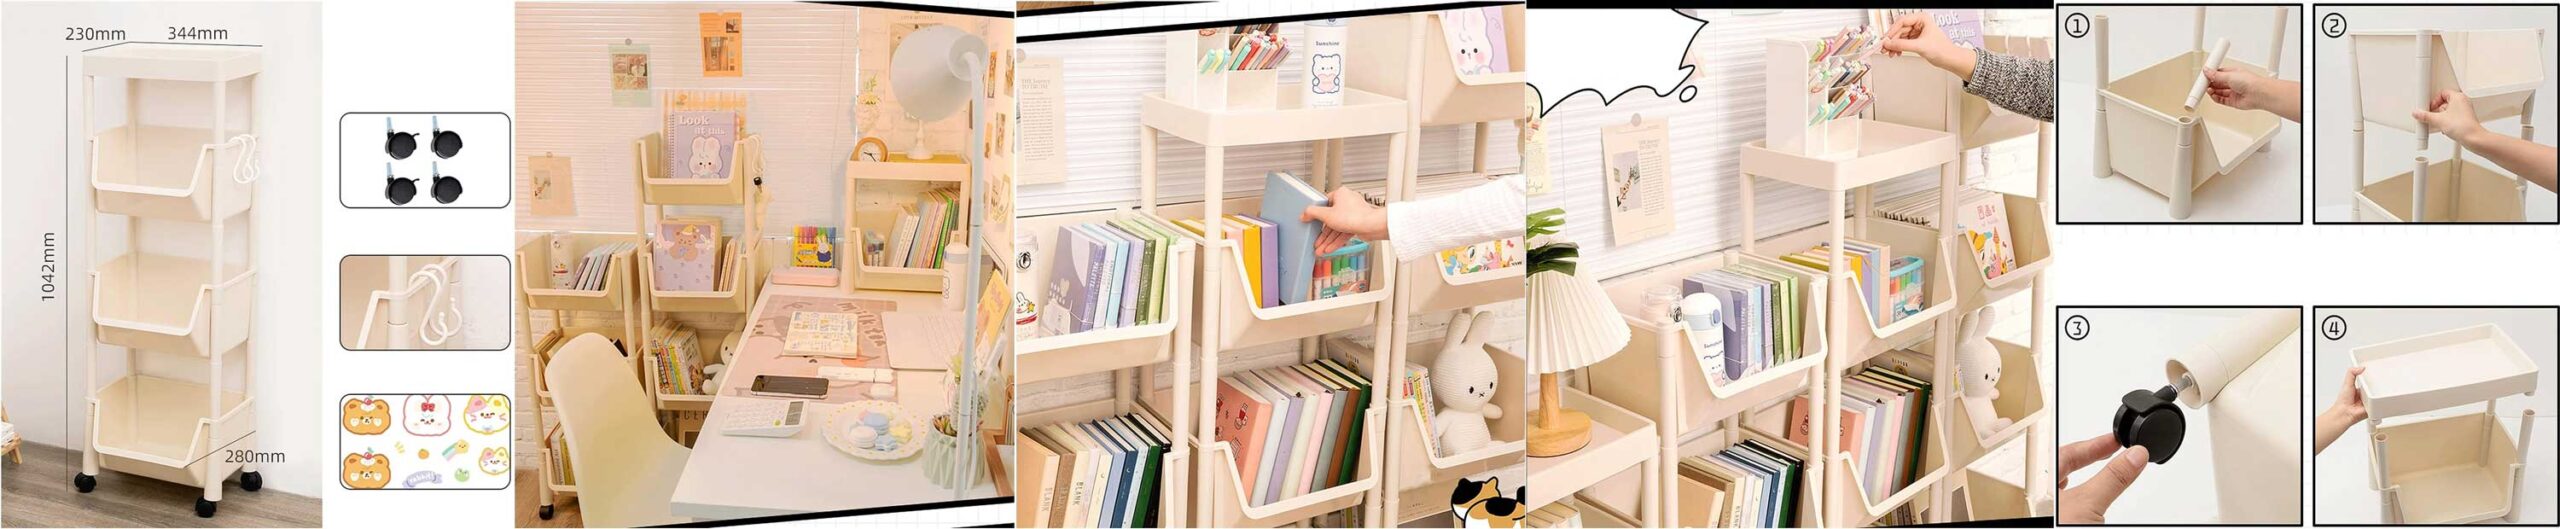 Rotating Bookshelf